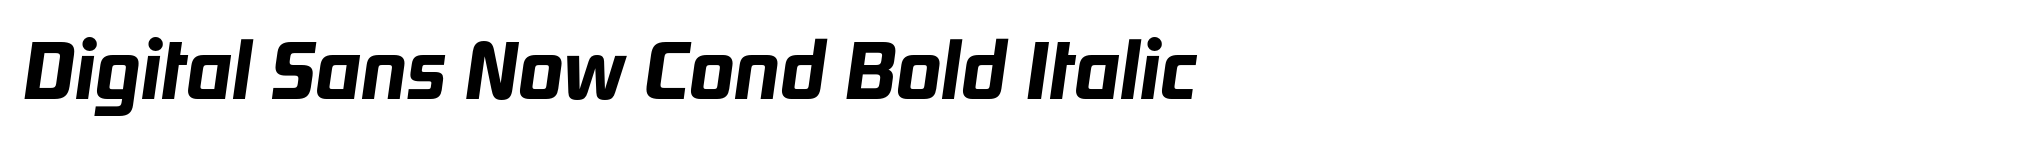 Digital Sans Now Cond Bold Italic image